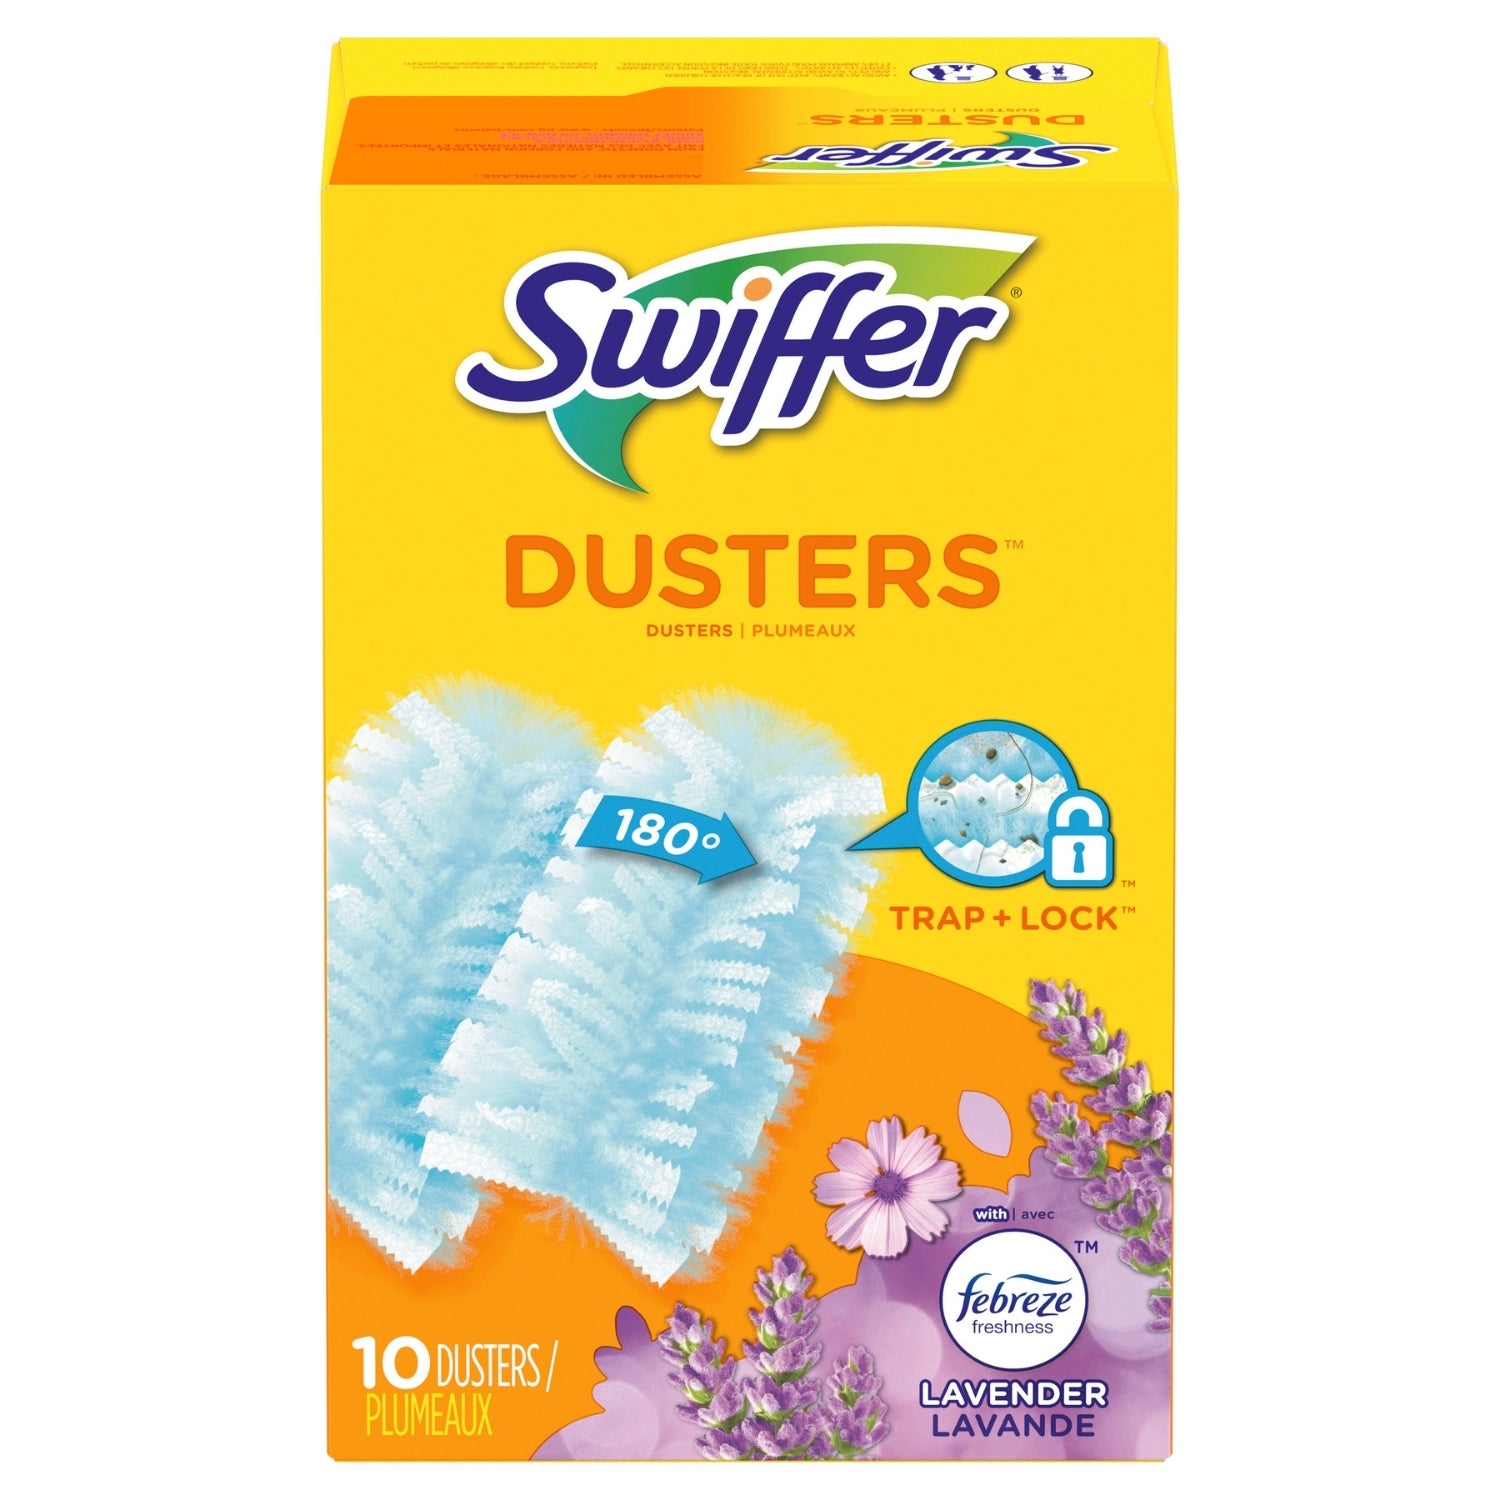 Swiffer Dusters Febreze Lavender 10ct